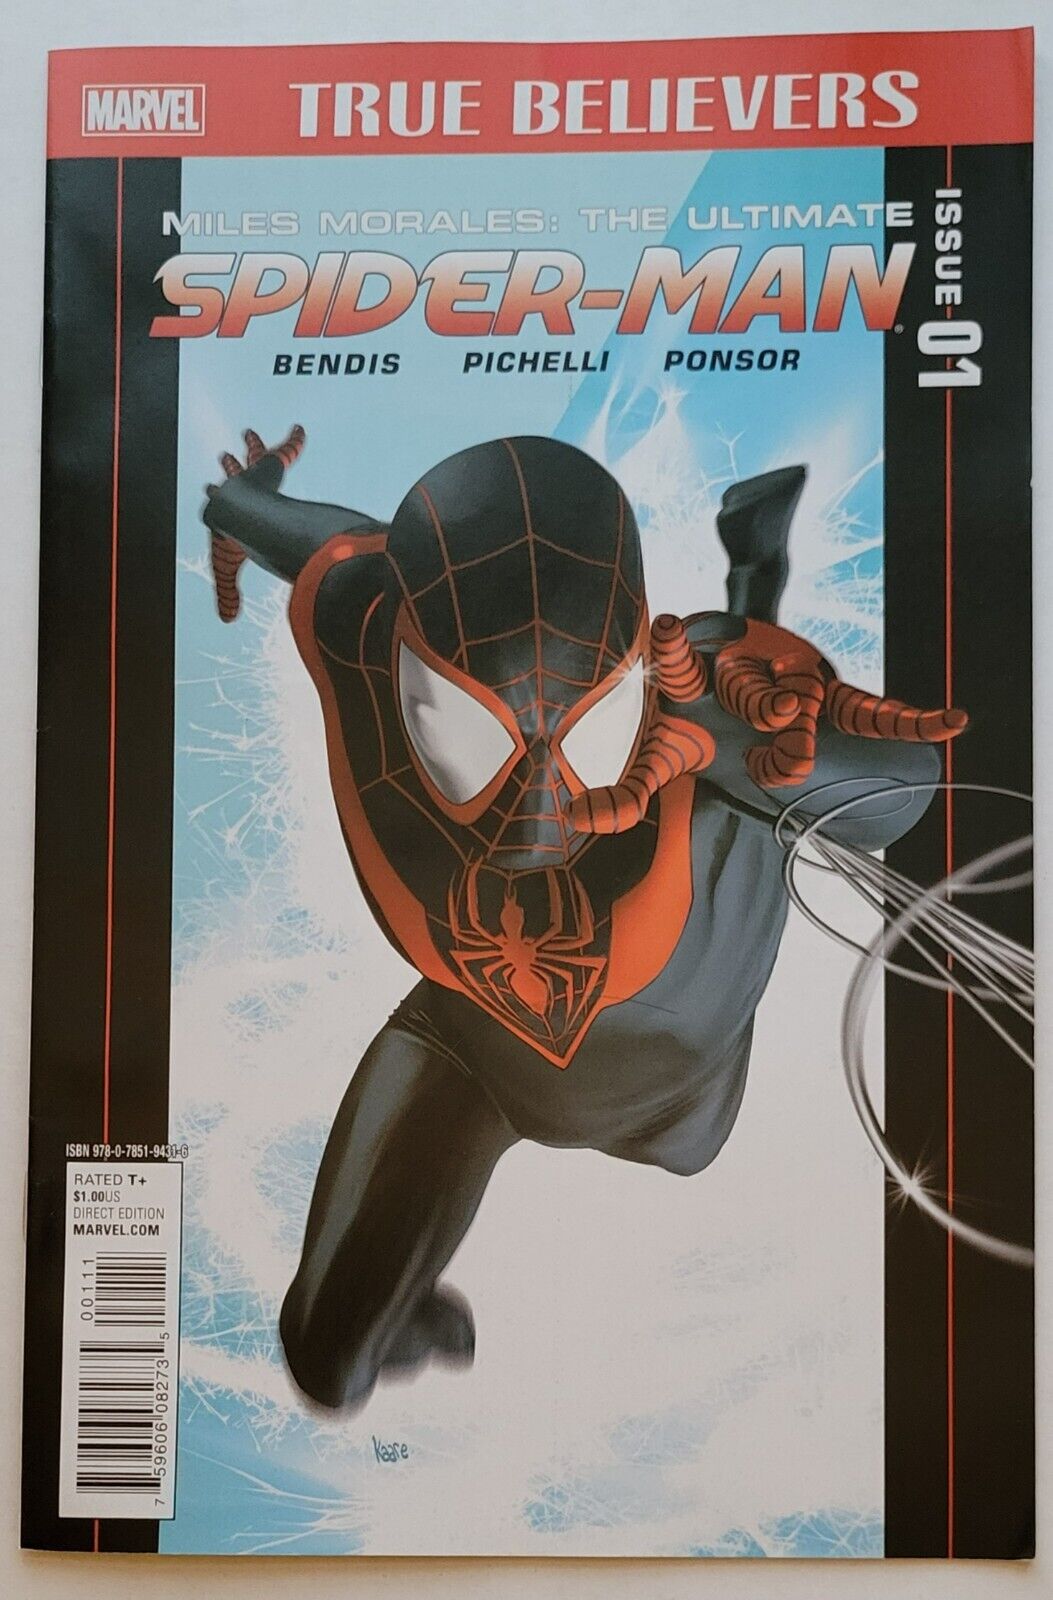 True Believers: Miles Morales the Ultimate Spider-Man #1 MARVEL 2015